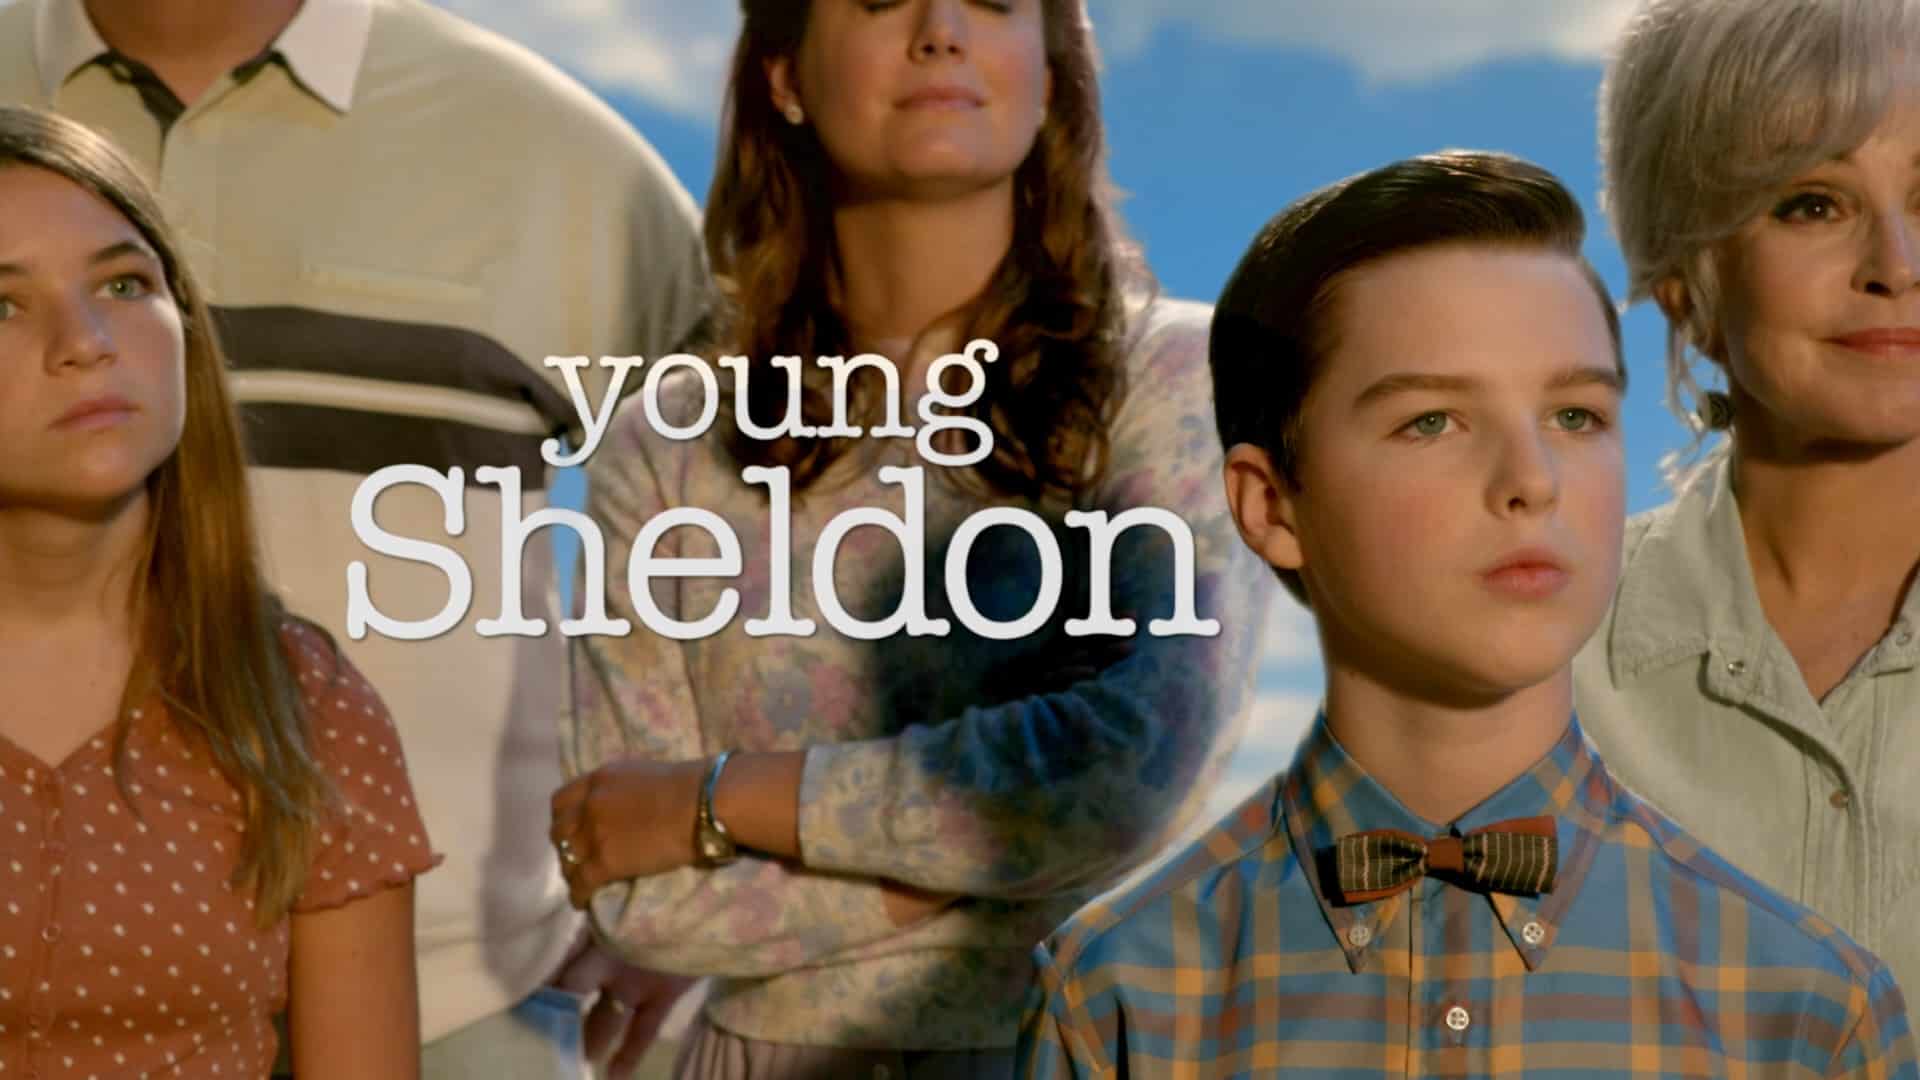 young sheldon season 5 title